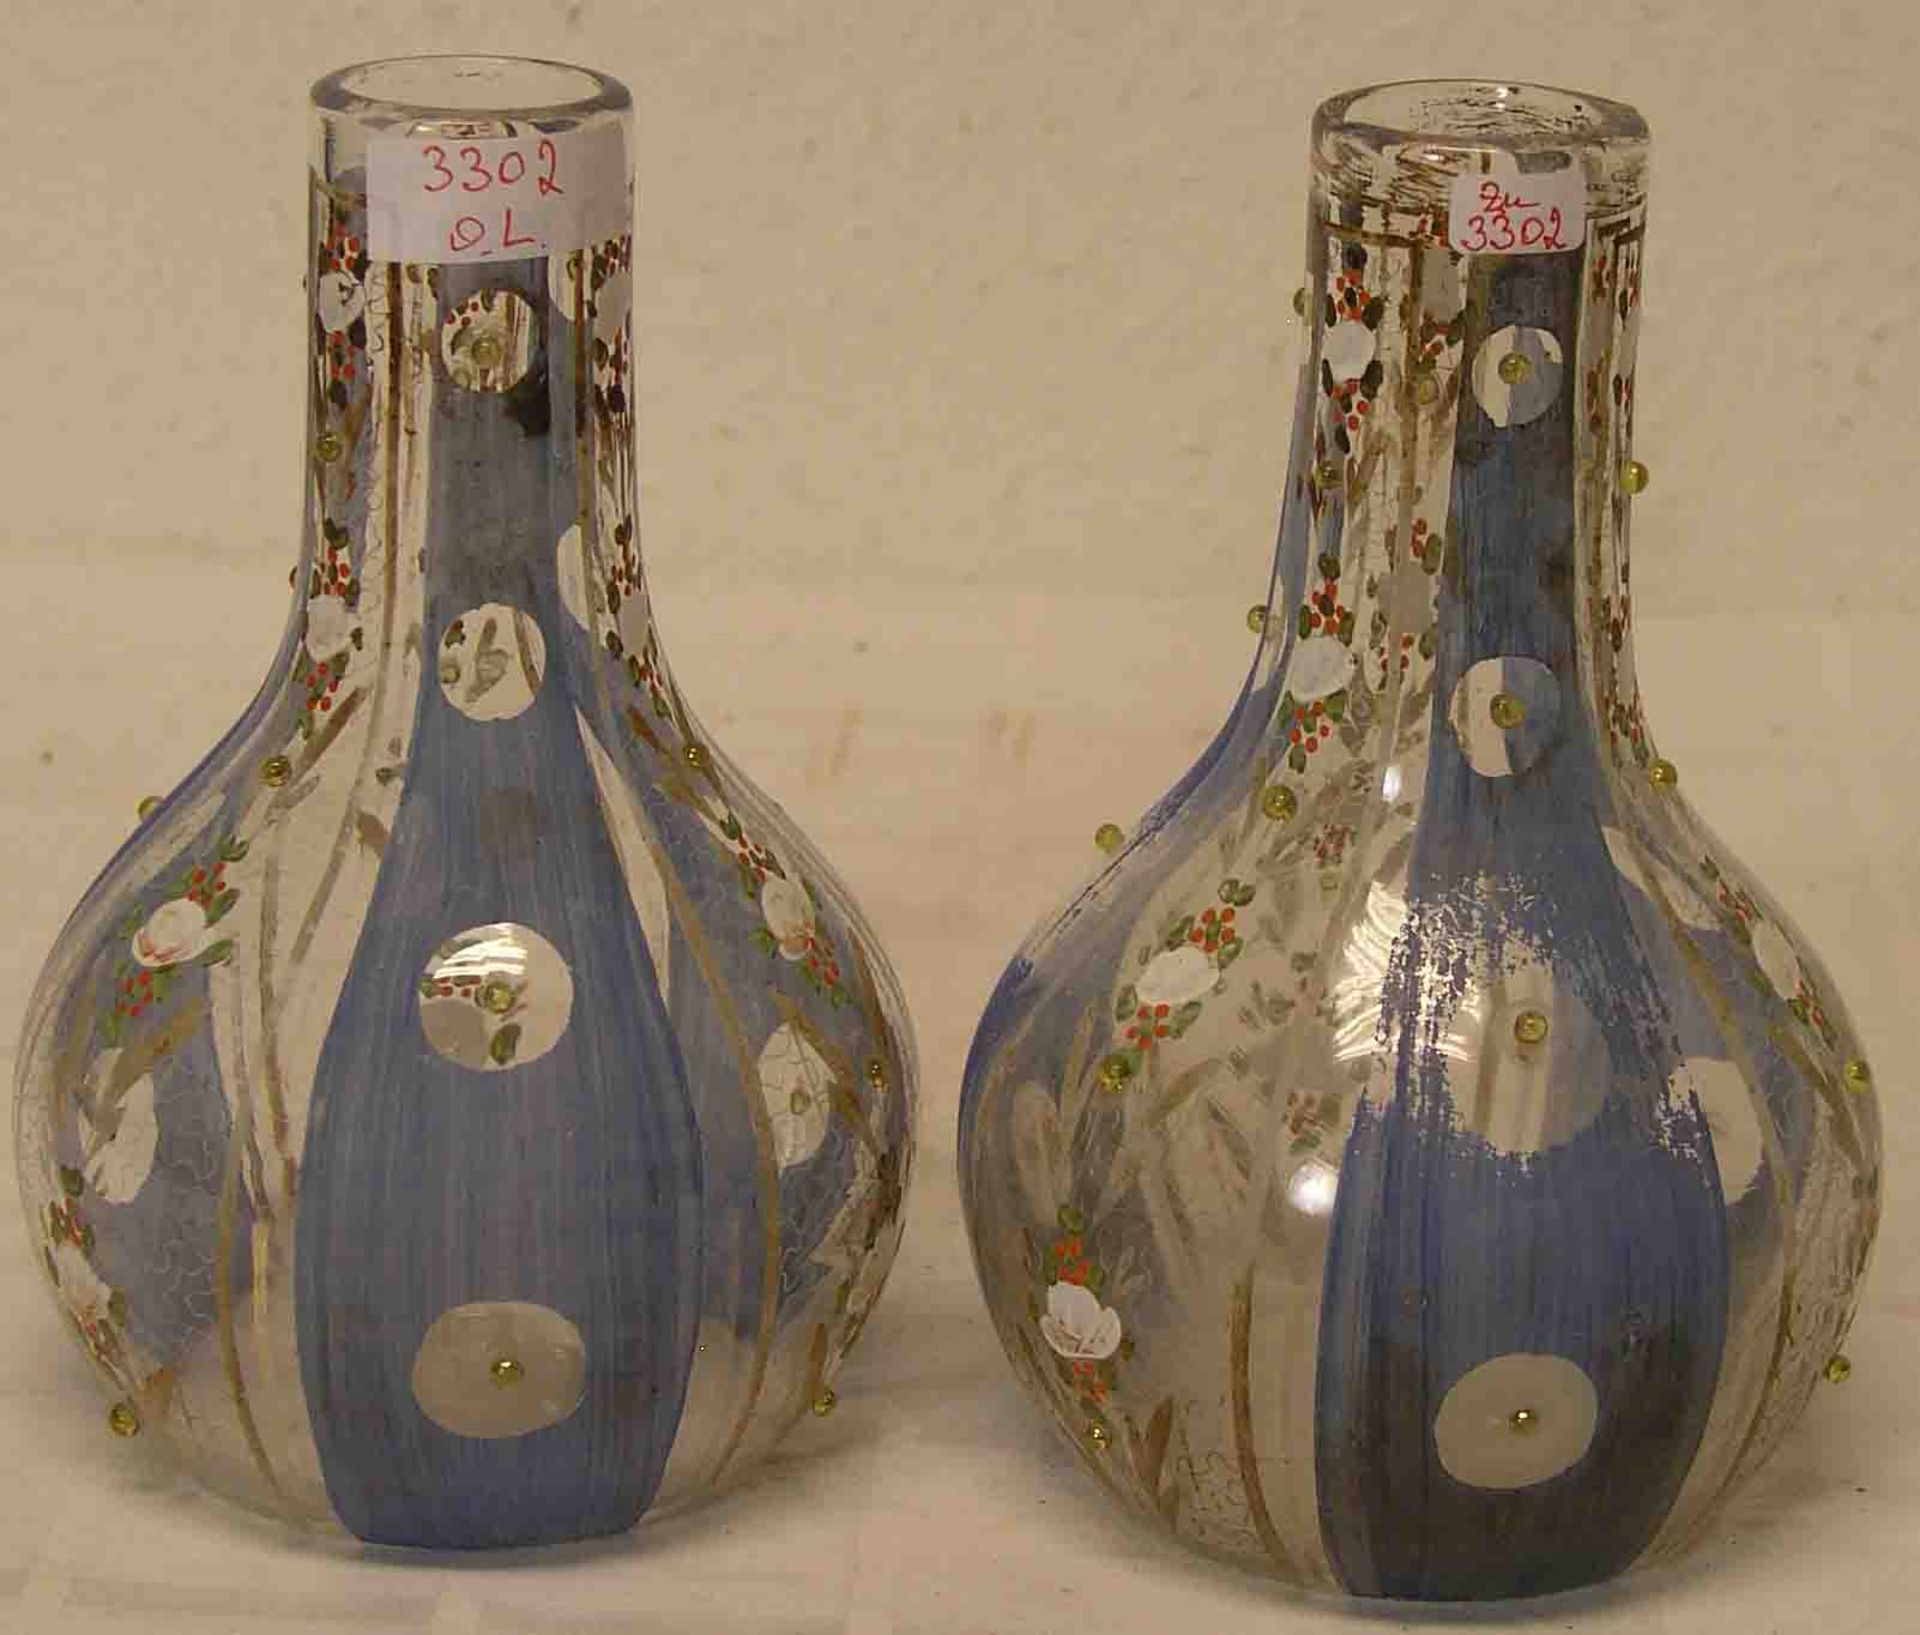 Paar Vasen. Mundgeblasen, mit aufgesetzten Noppen, bemalt; berieben. Höhe: 18cm.- - -20.17 % buyer's